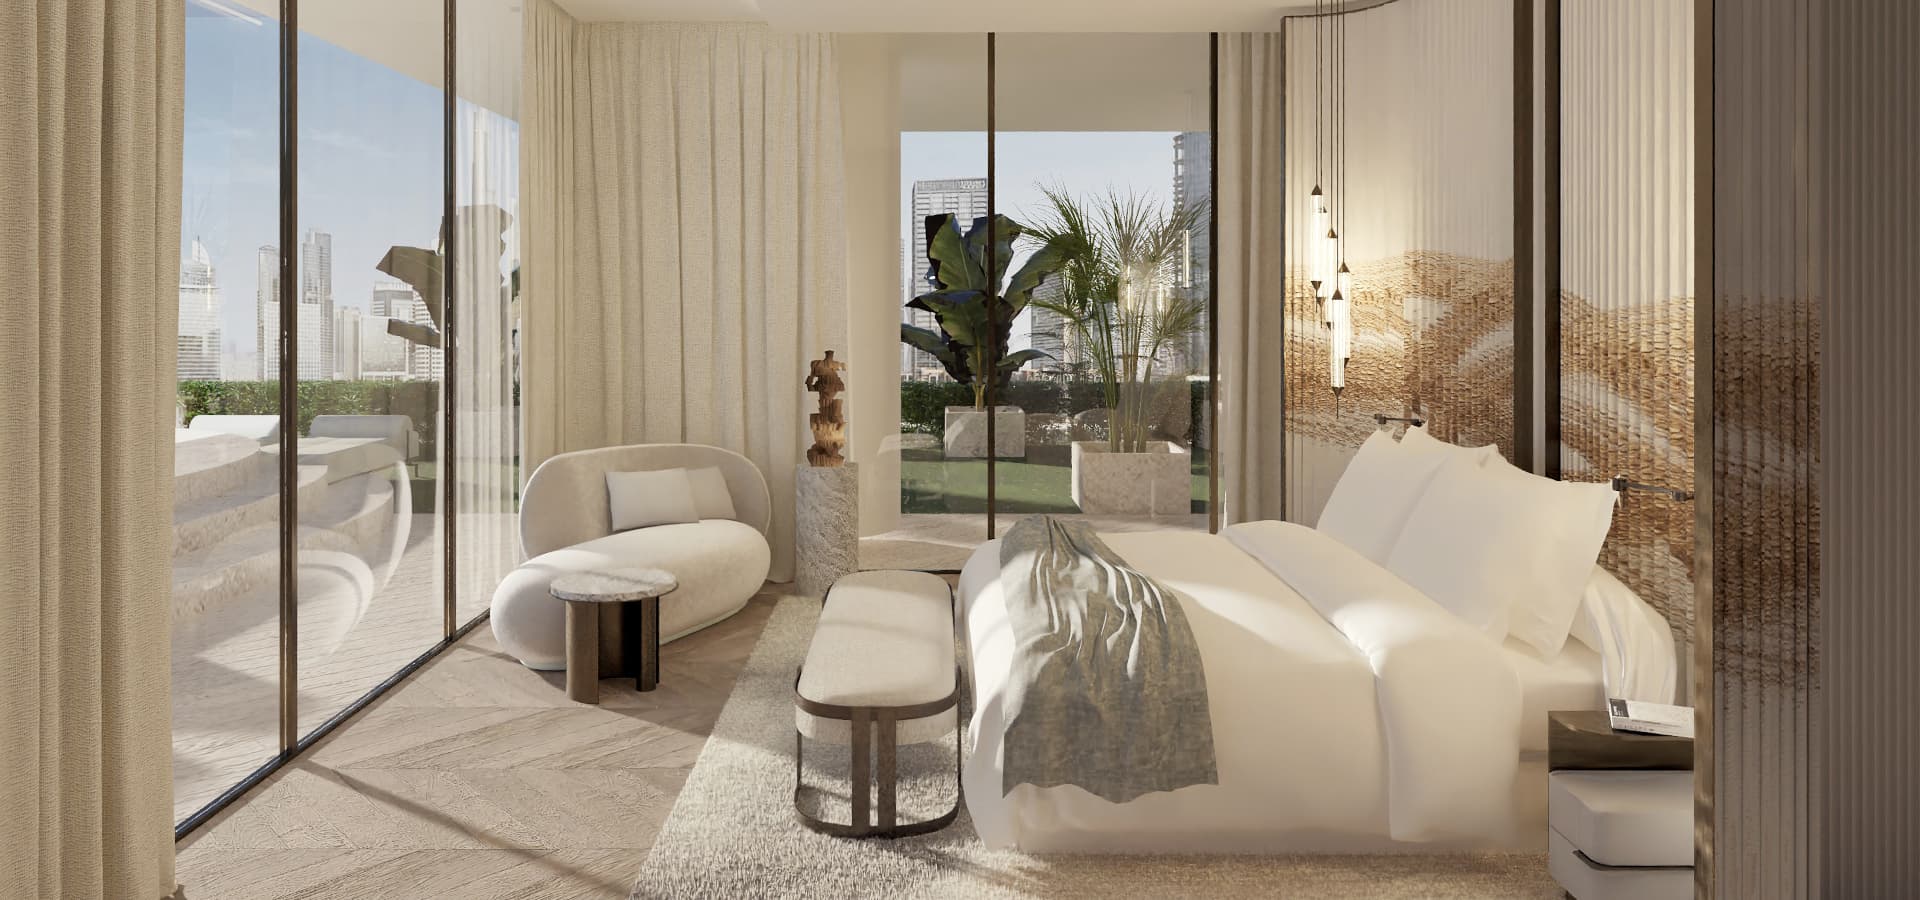 The Ritz-Carlton Residences by Khamas Group in Business Bay, Dubai ...